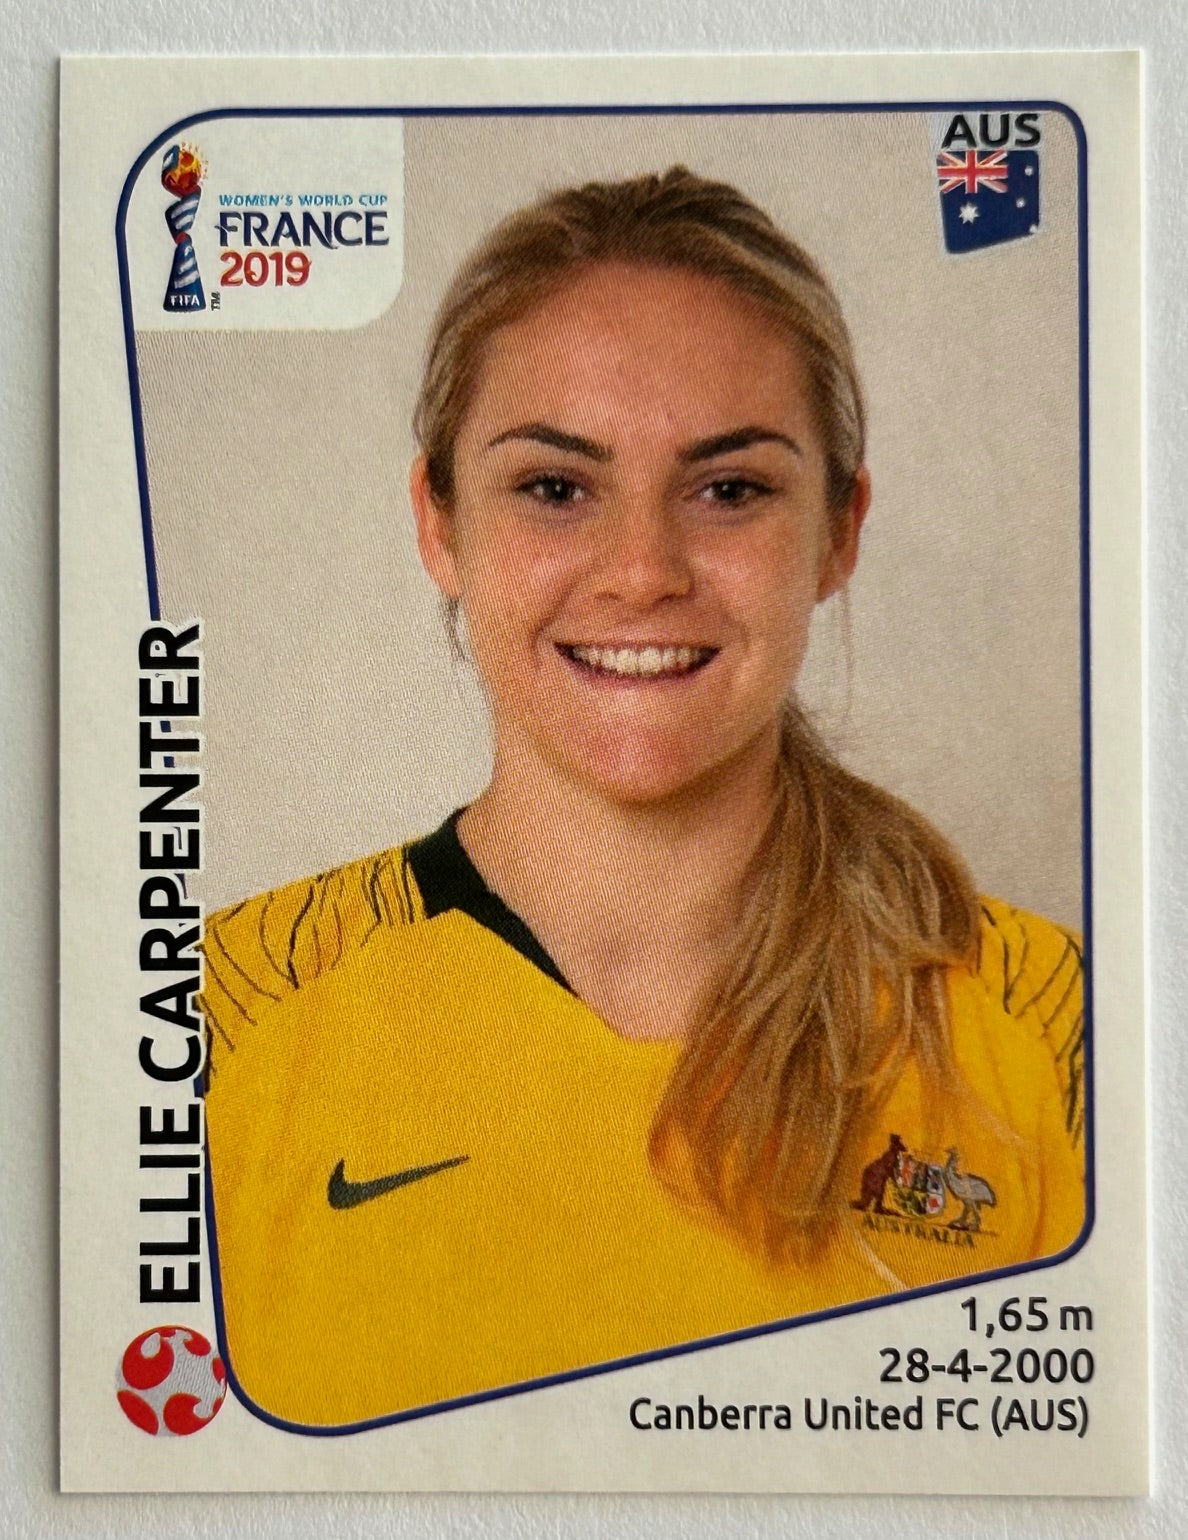 Panini FIFA Women's World Cup France 2019 - ELLIE CARPENTER (AUSTRALIA) Rookie RC Sticker #180